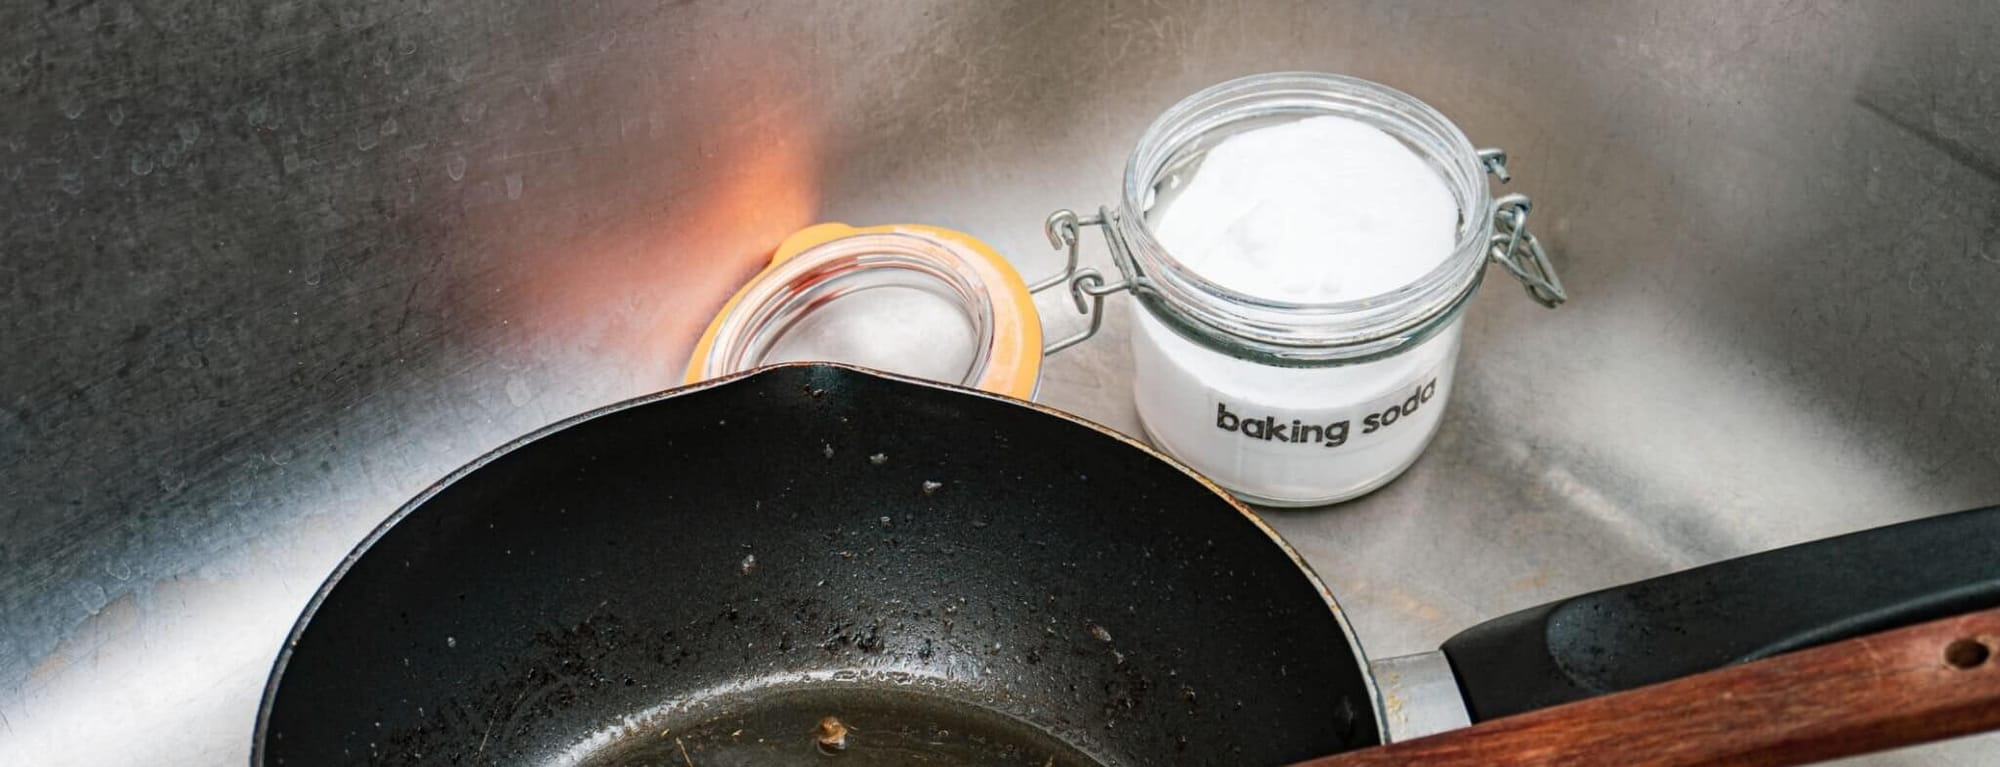 baking soda with non-stick pan